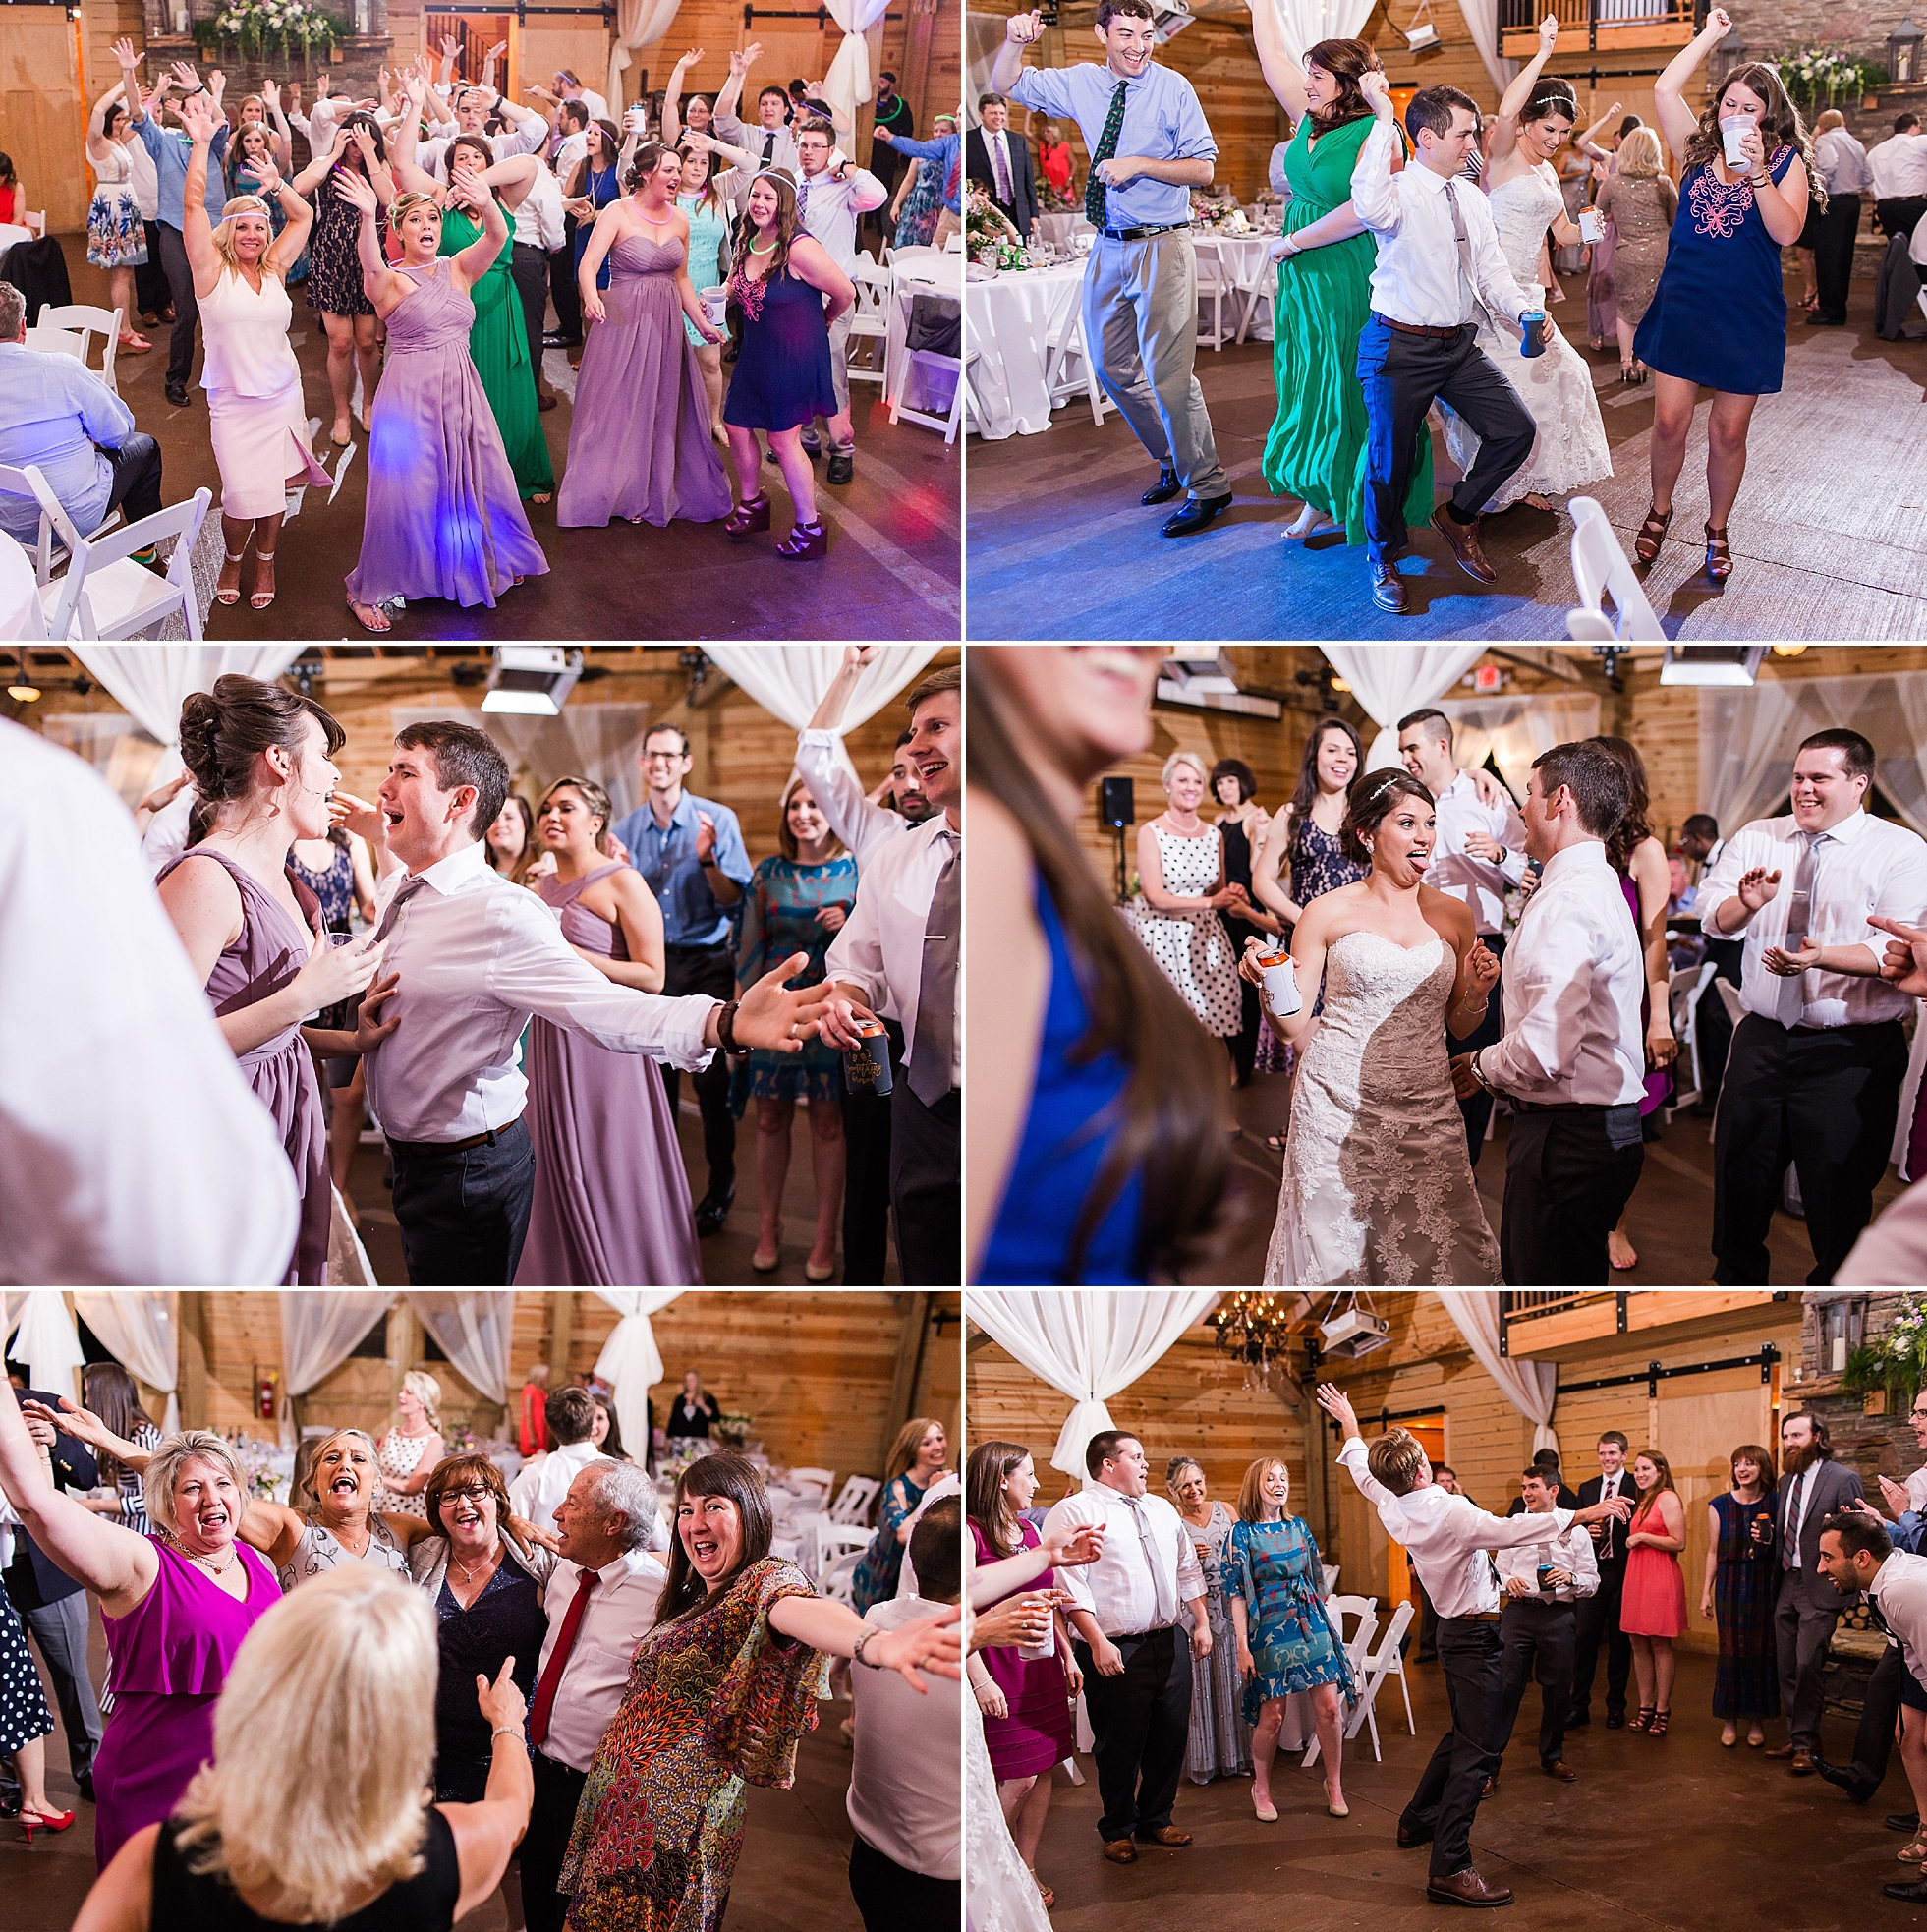 dance floor wedding reception athens